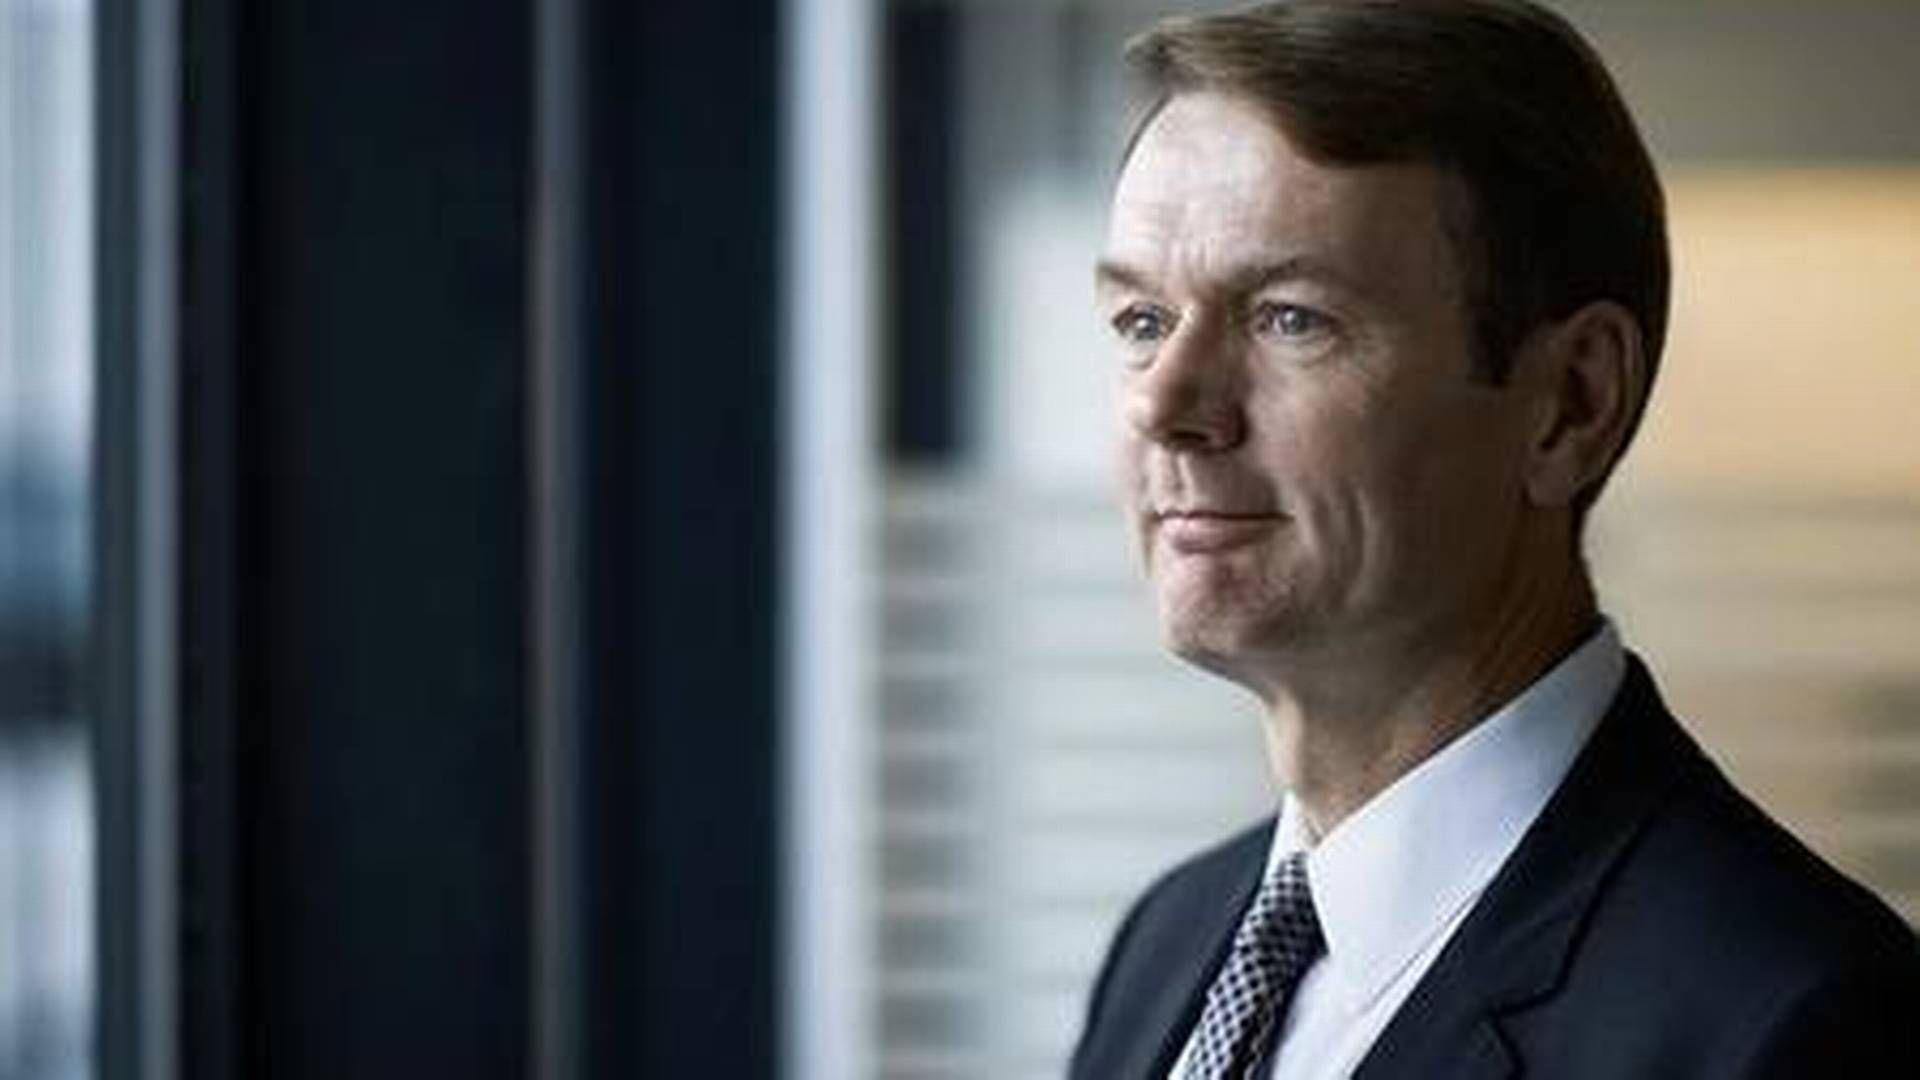 Lars Bo Bertram, CEO of Bankinvest.